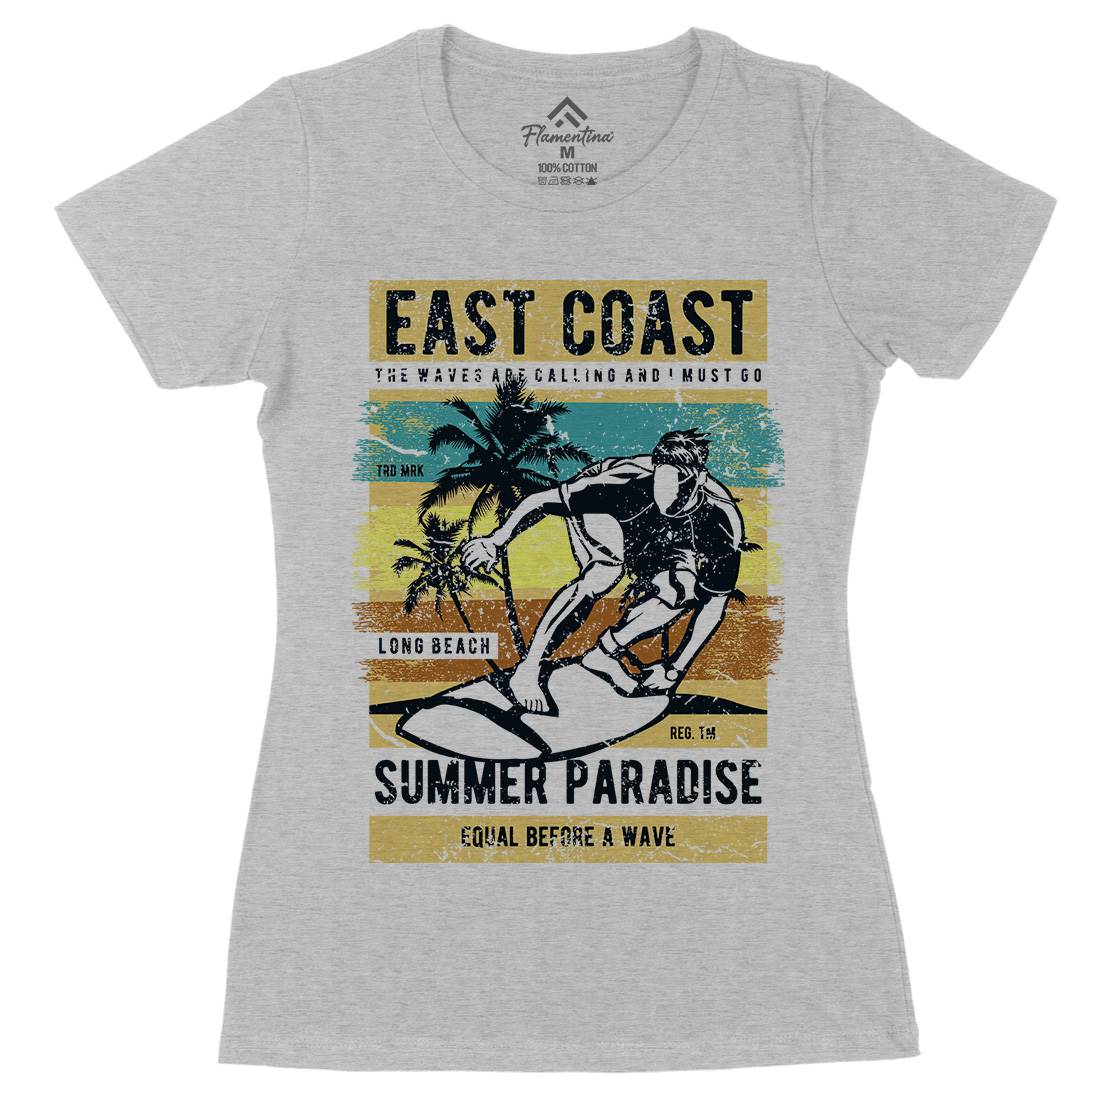 East Coast Surfing Womens Organic Crew Neck T-Shirt Surf A648